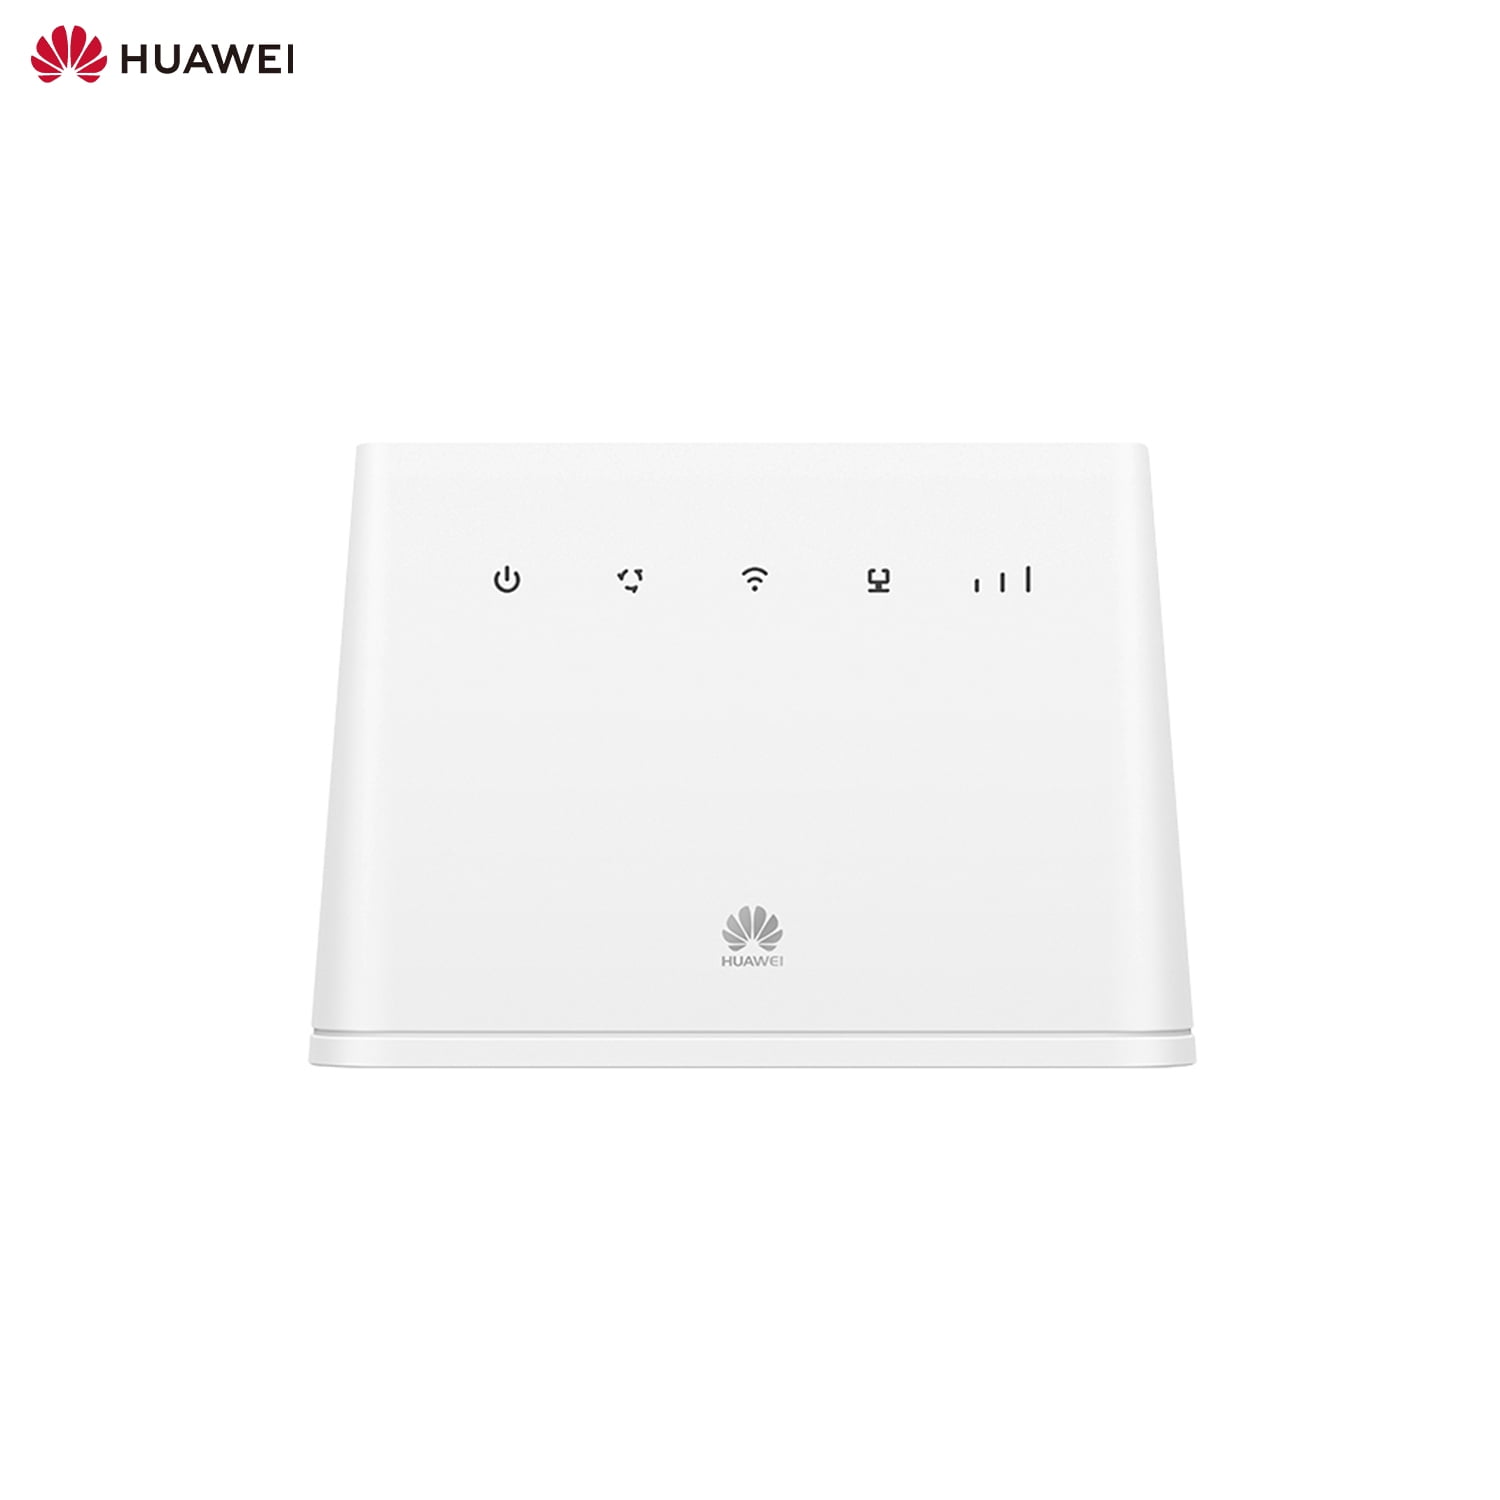 Интернет центр huawei. Huawei b311-221. Wi-Fi роутер Huawei b311-221. Интернет-центр Huawei b311-221. Роутер Huawei b311-221 белый.